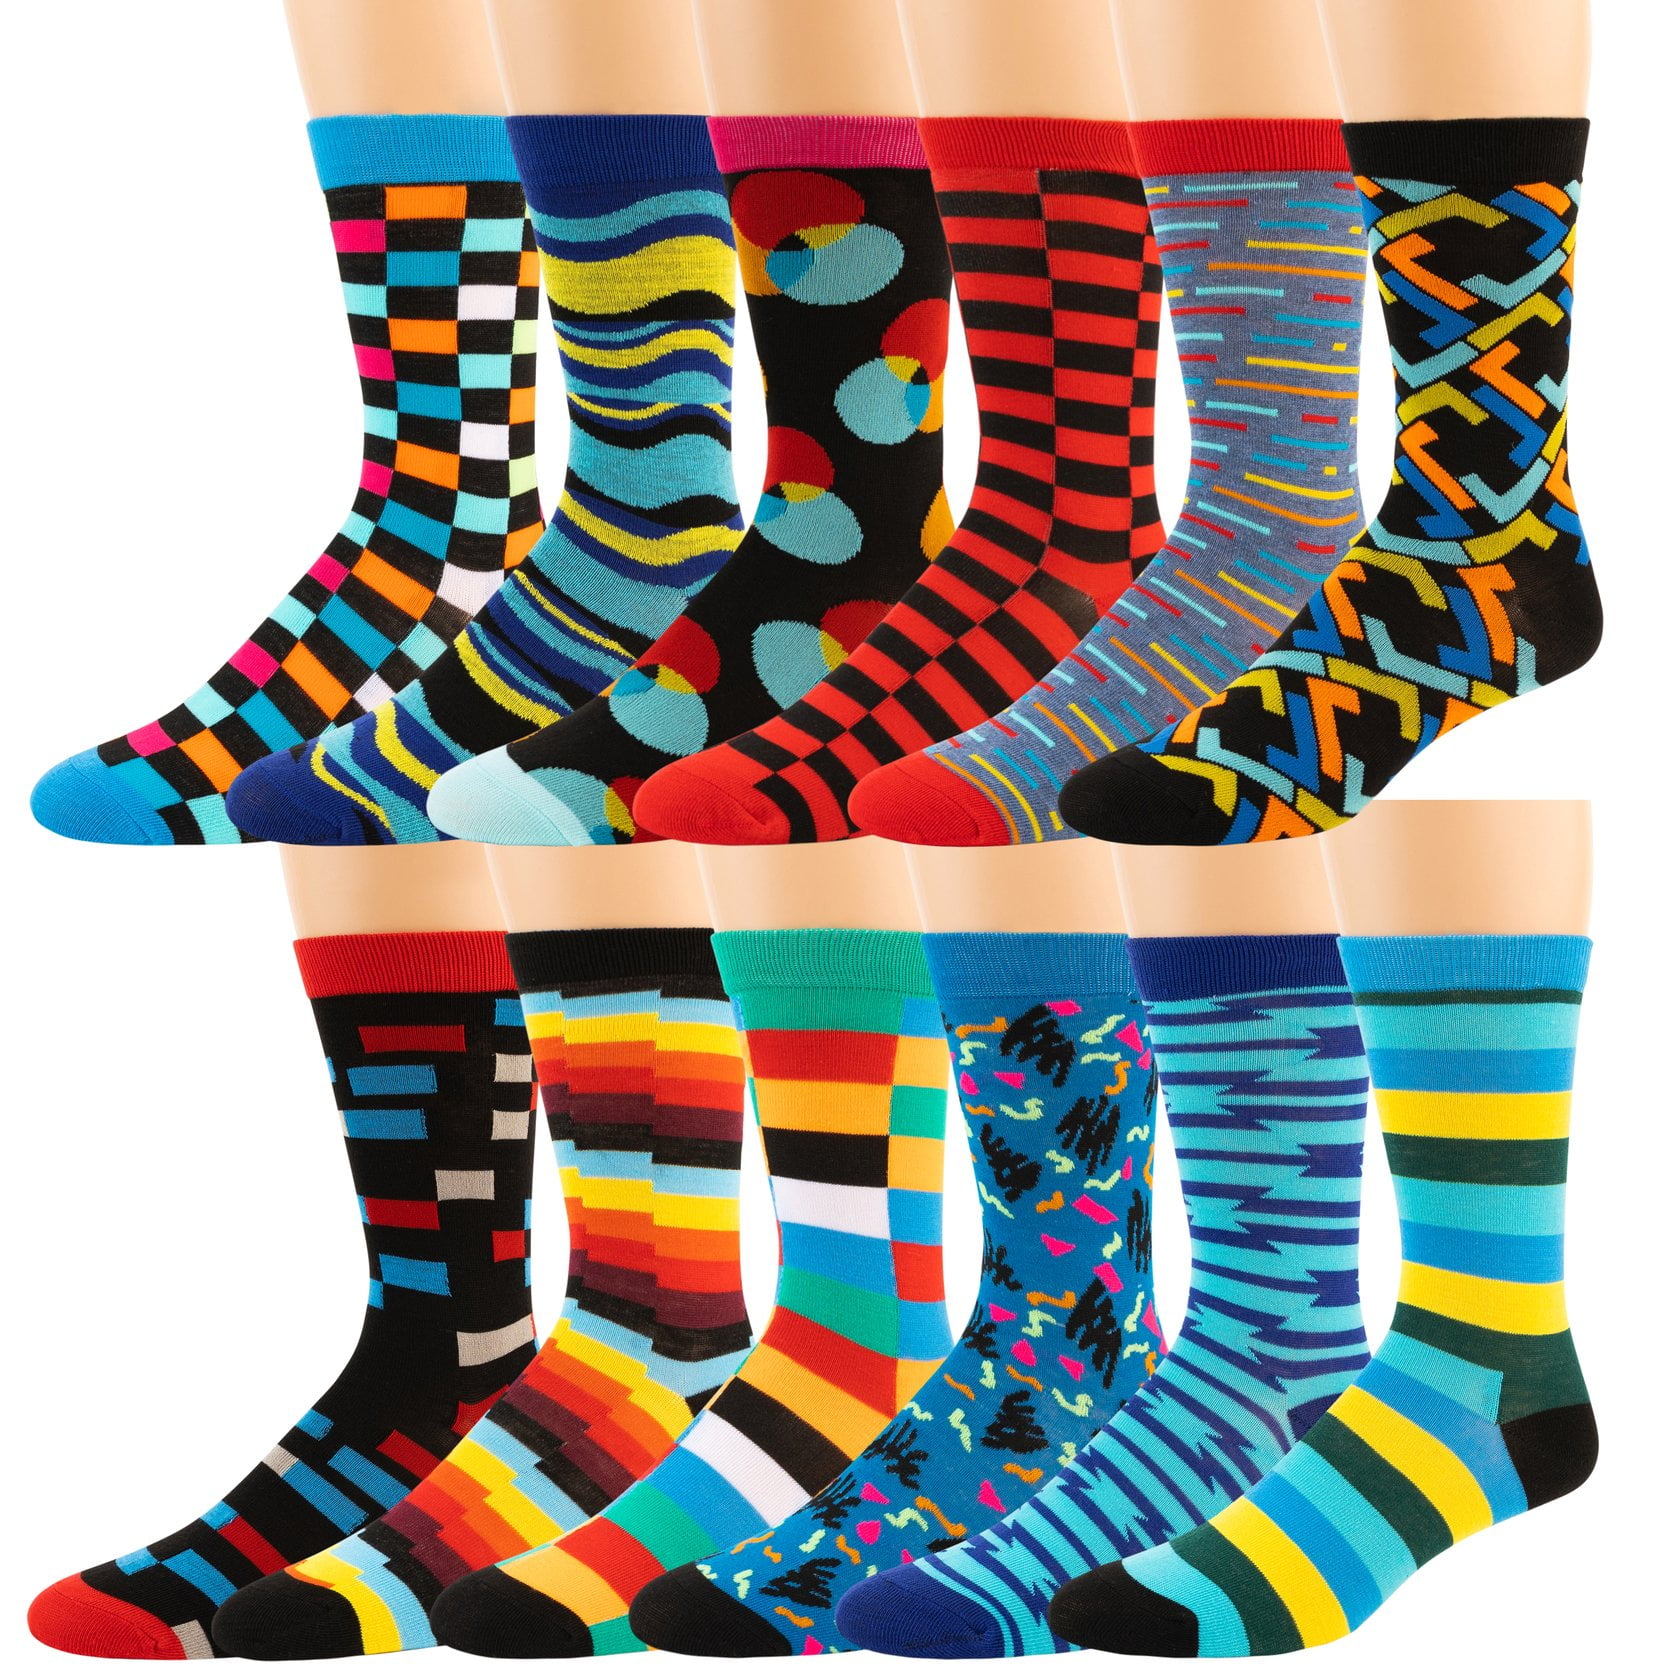 Zeke Men S Pattern Dress Funky Fun Colorful Crew Socks 12 Assorted Patterns Variation H Numeric